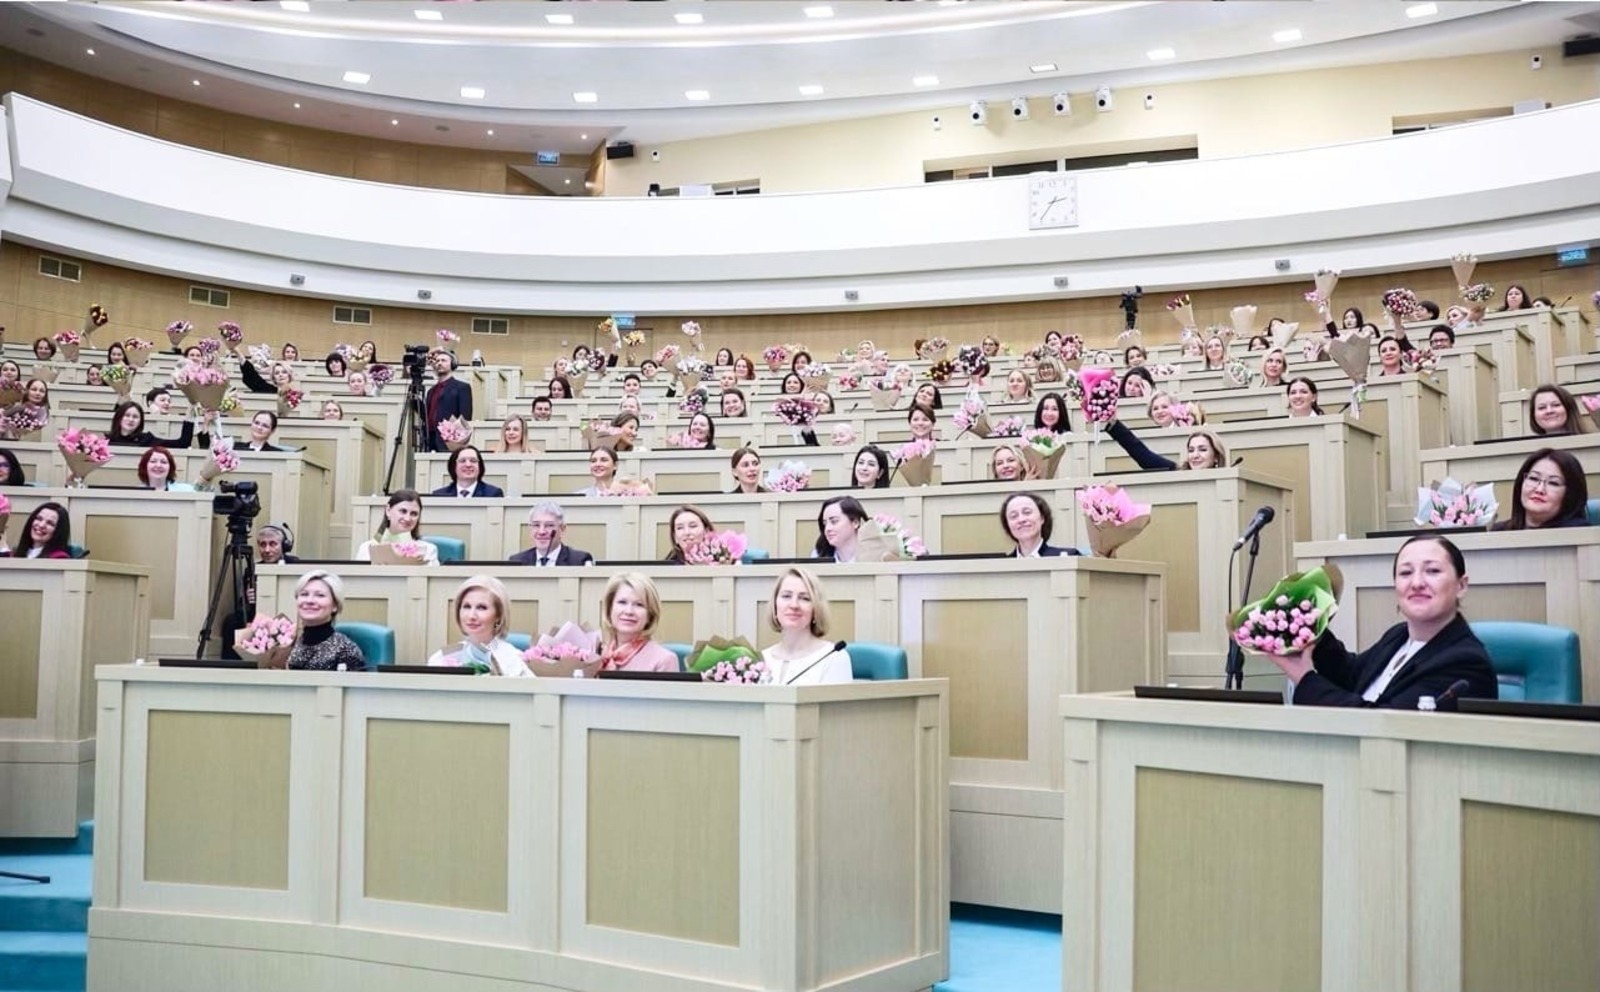 council.gov.ru